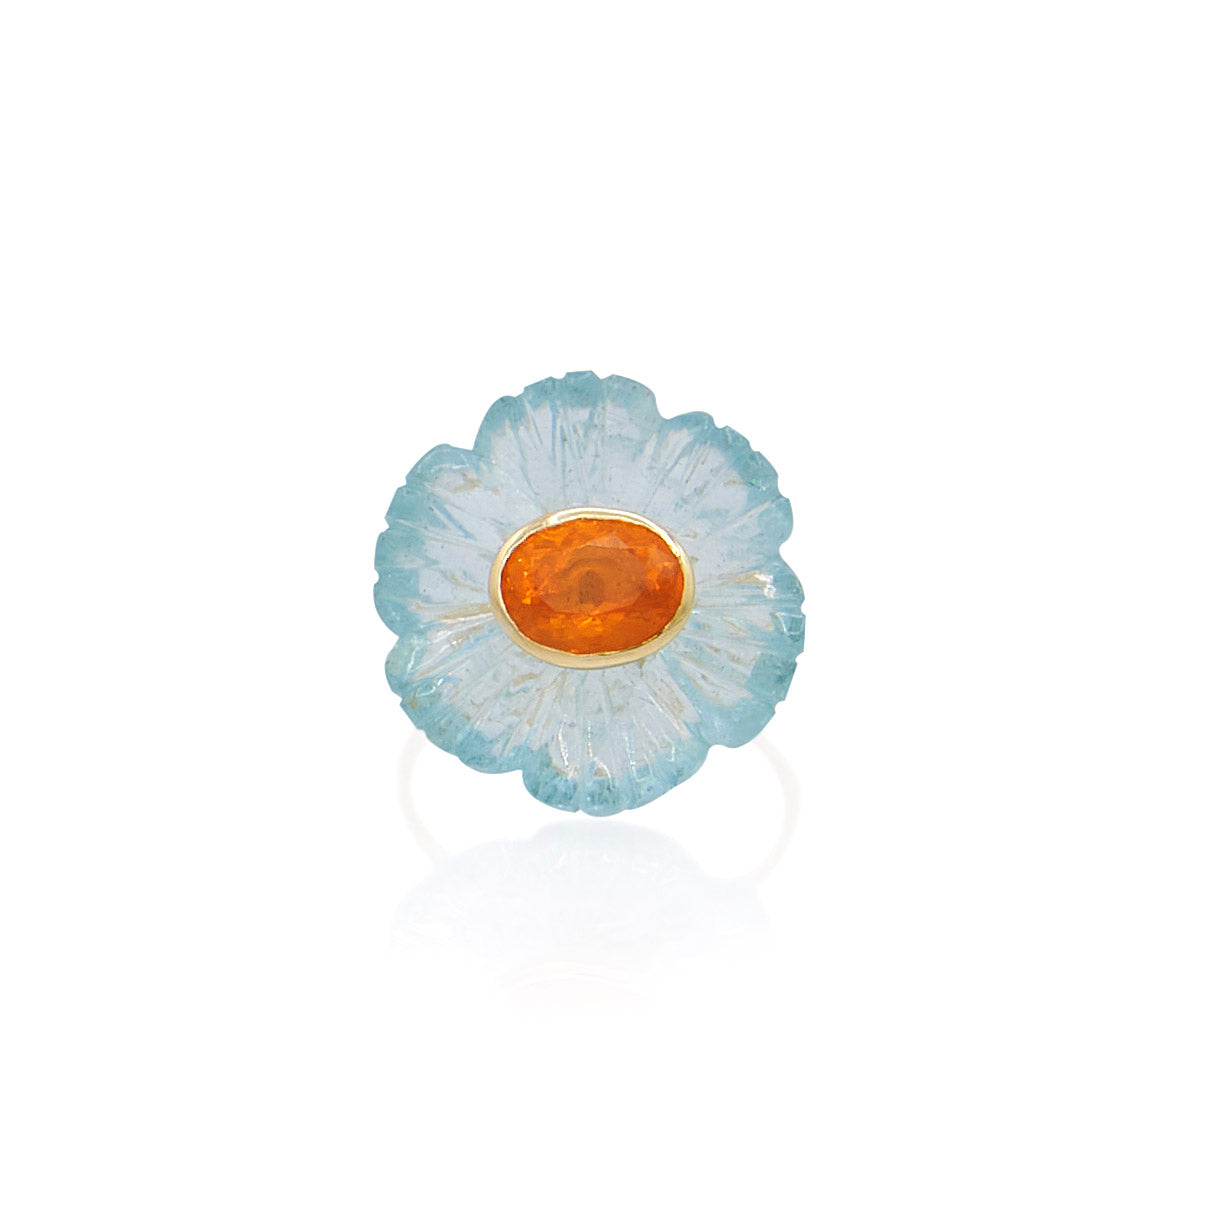 Sophie Joanne Paradise Small Flower Ring - Aquamarine & Orange Fire Opal